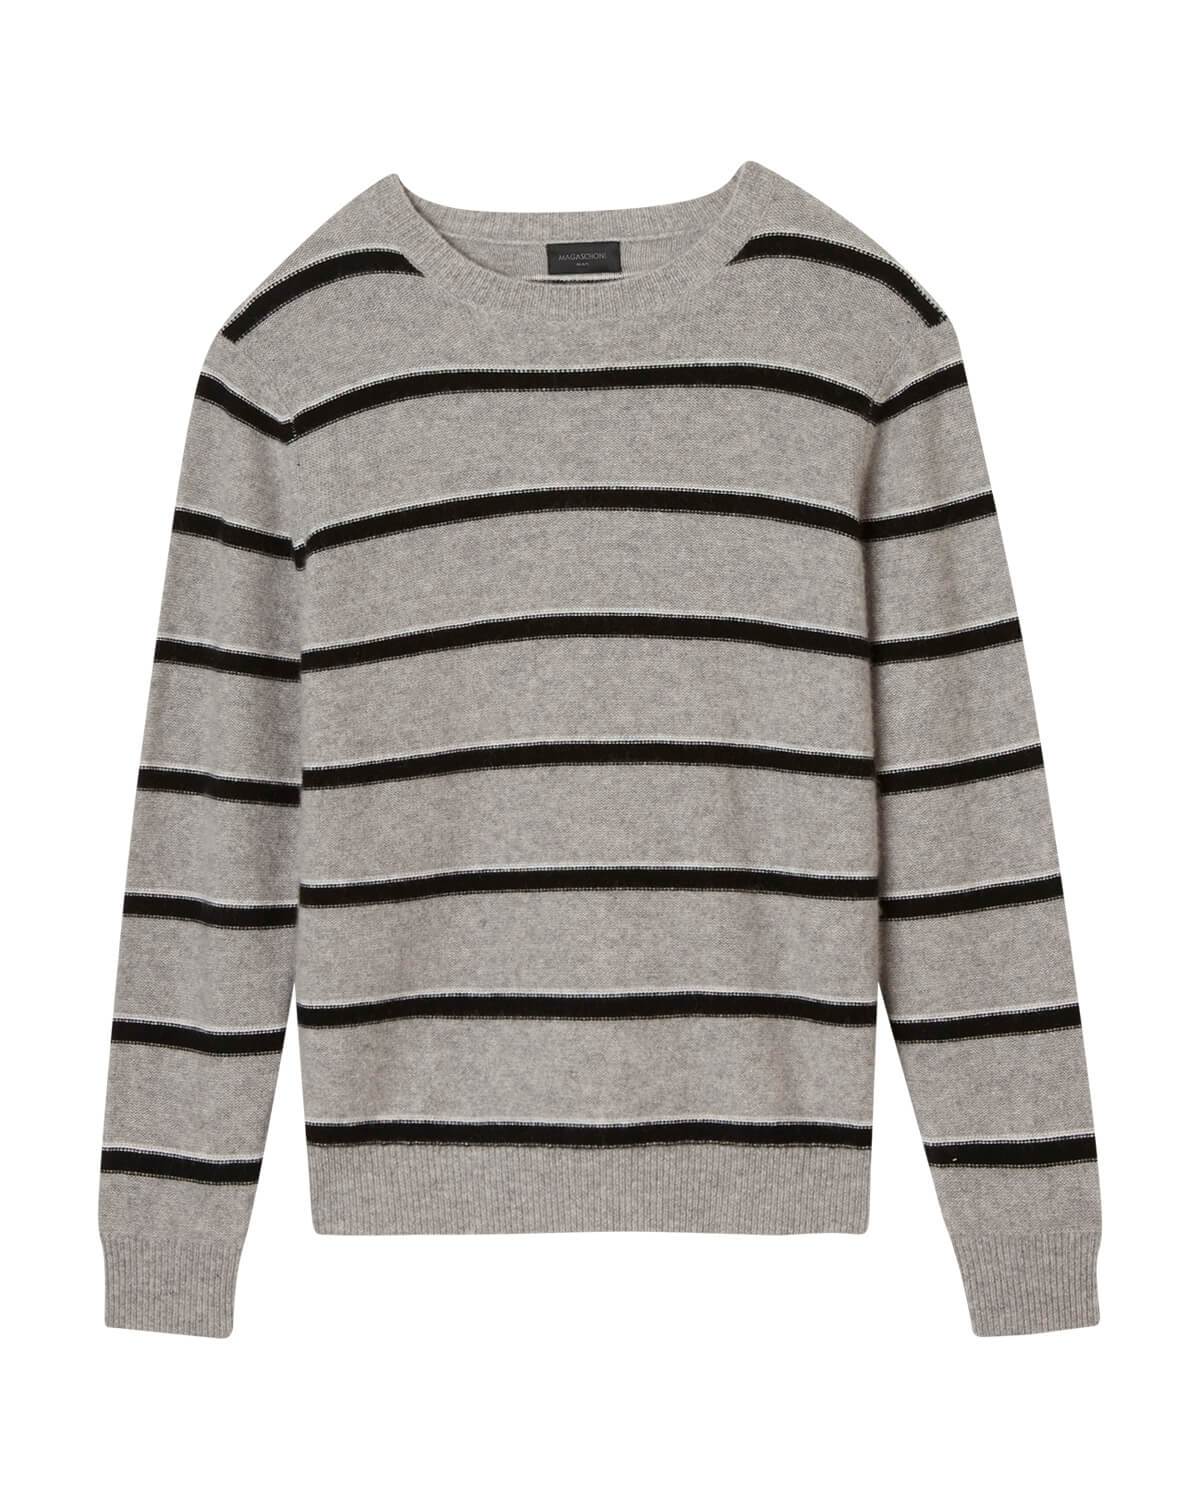 Shop Men's Cashmere Tricolor Stripe Sweater | Magaschoni Men | JANE + MERCER